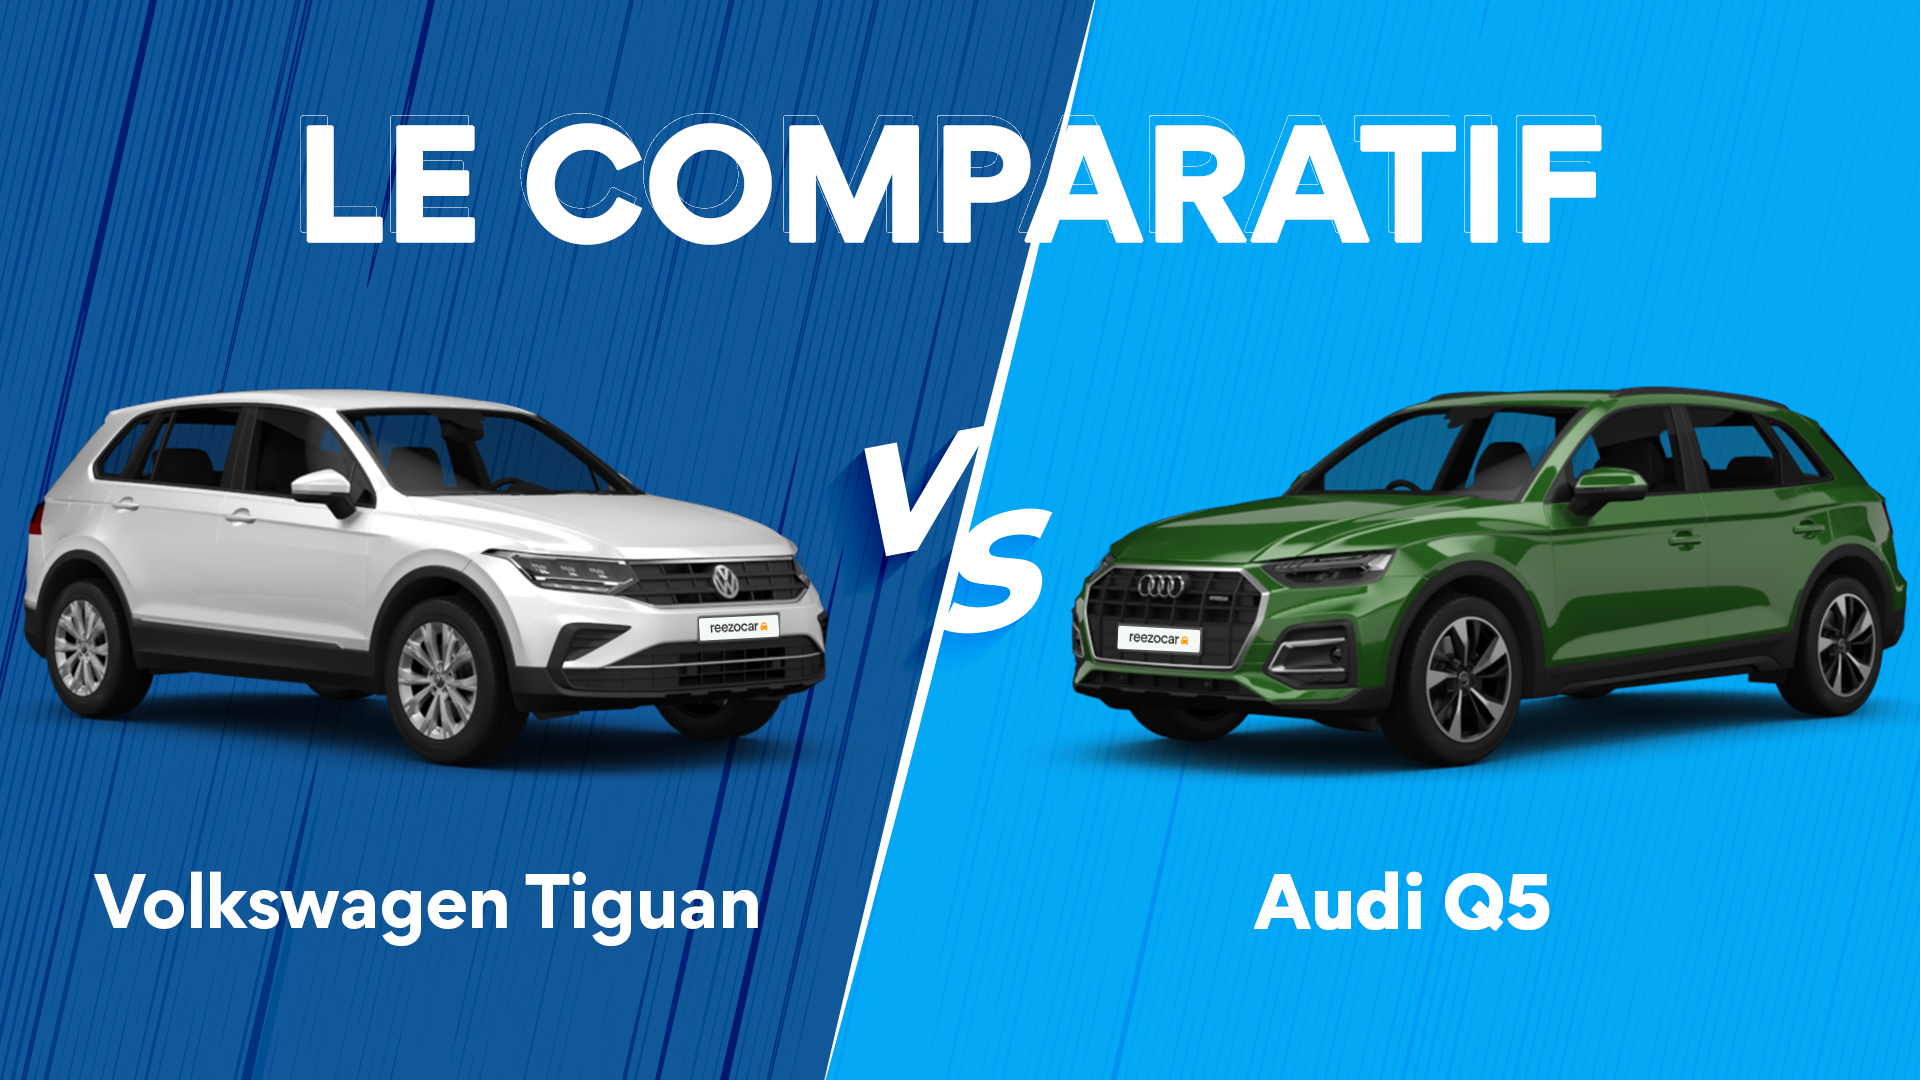 Audi Q5 Vs Volkswagen Tiguan : pas qu’une question de budget…